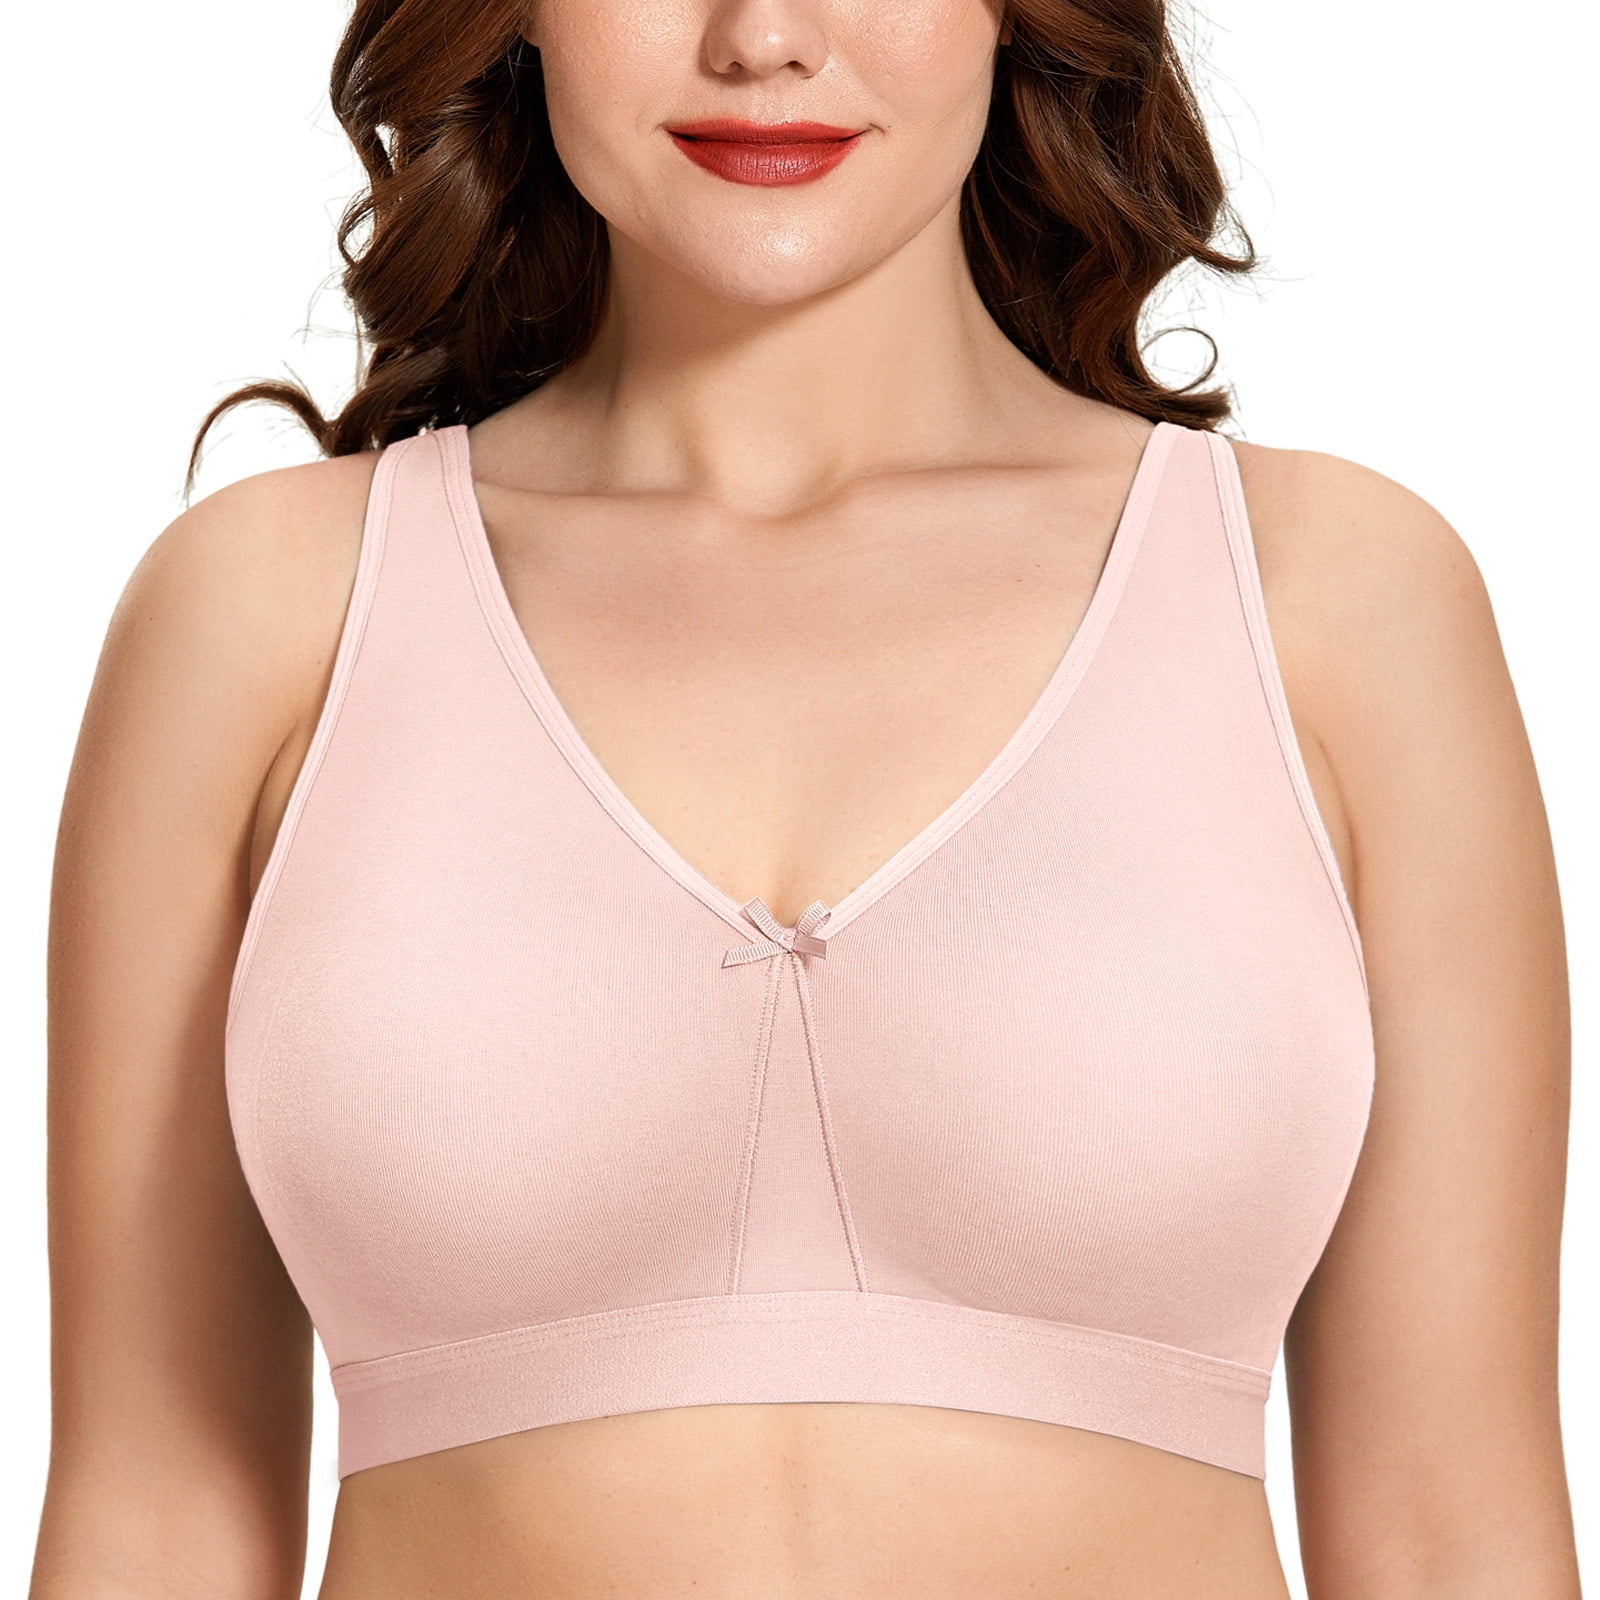  Womens Wireless Plus Size Lace Bra Full Coverage Unlined  Minimizer Bra Comfort Cotton 44DD Pink